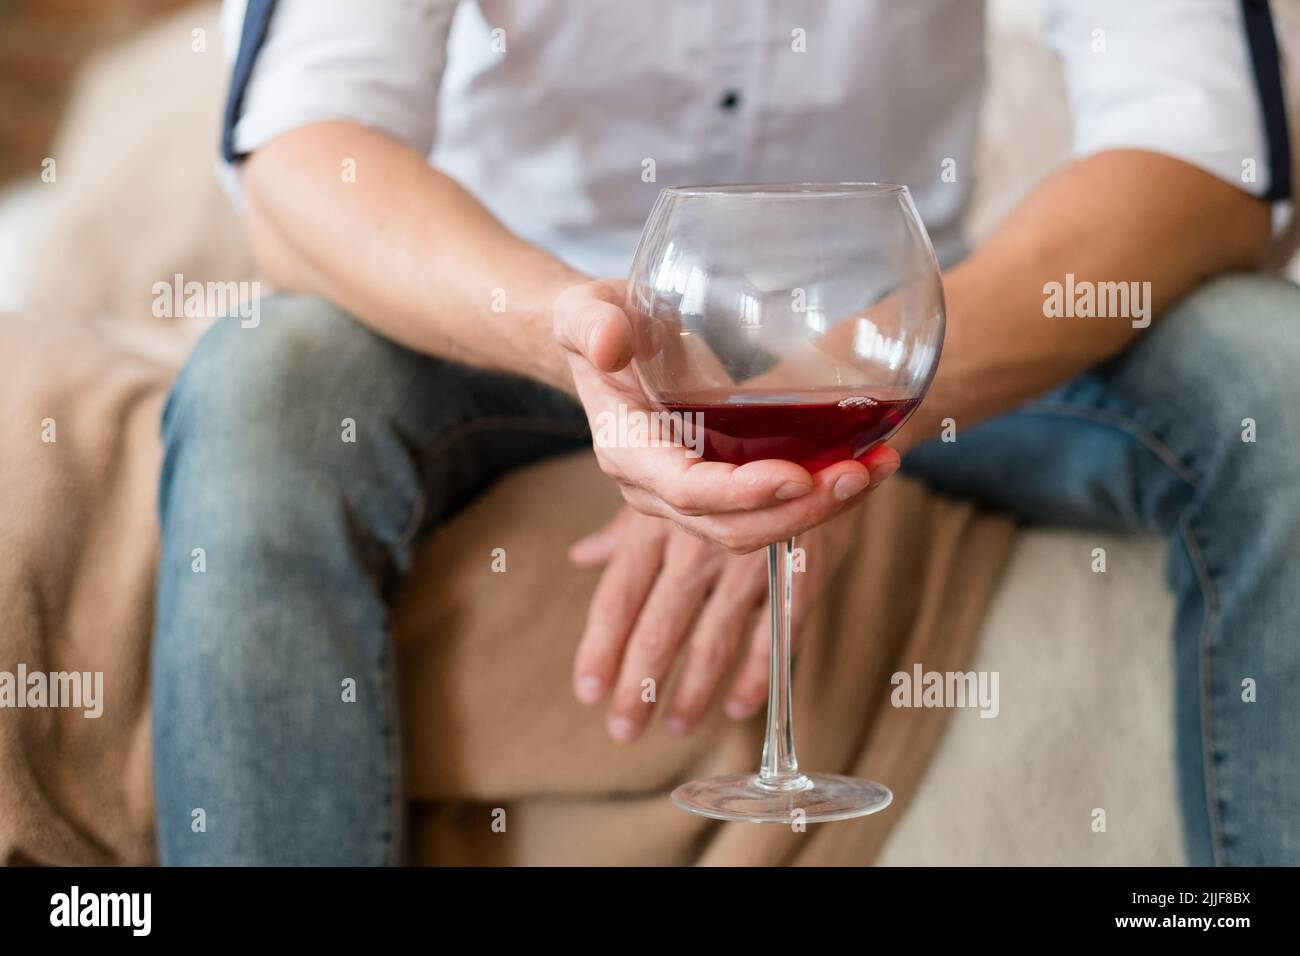 problem depression alcohol abuse man wine home Stock Photo